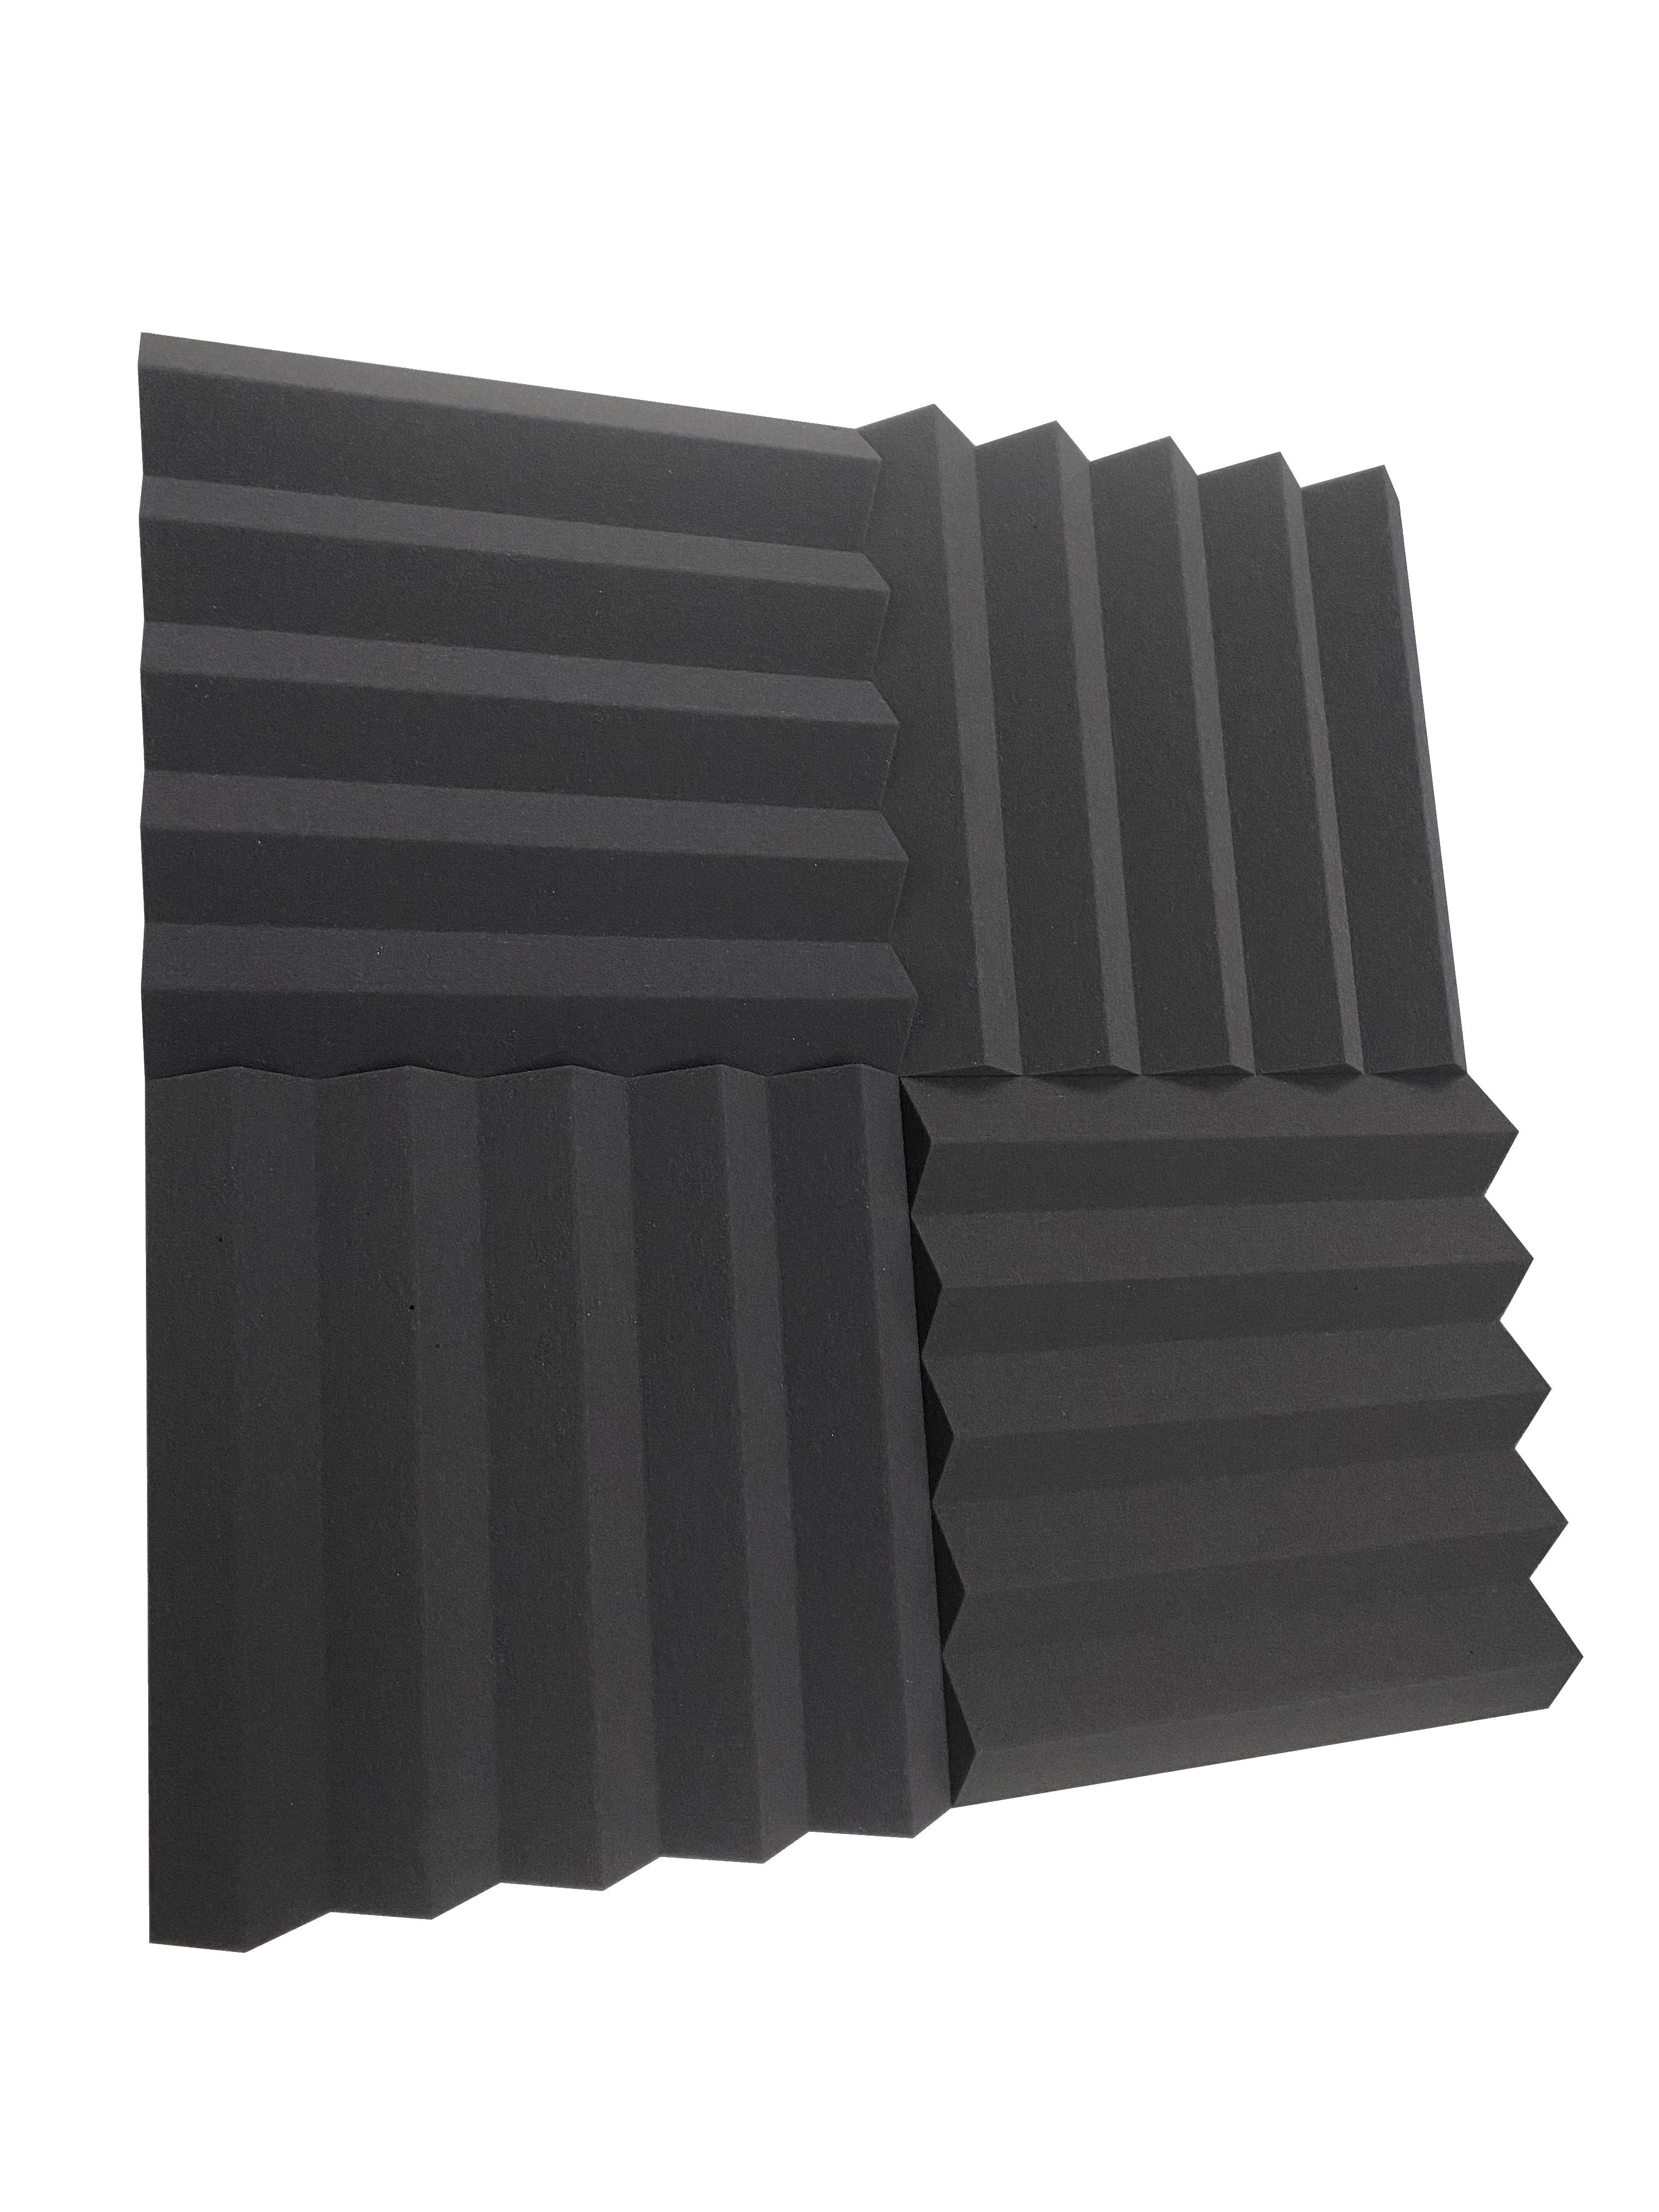 Wedge PRO Combo Acoustic Studio Foam Tile Kit – 42 Fliesen, 13,92 m² Abdeckung